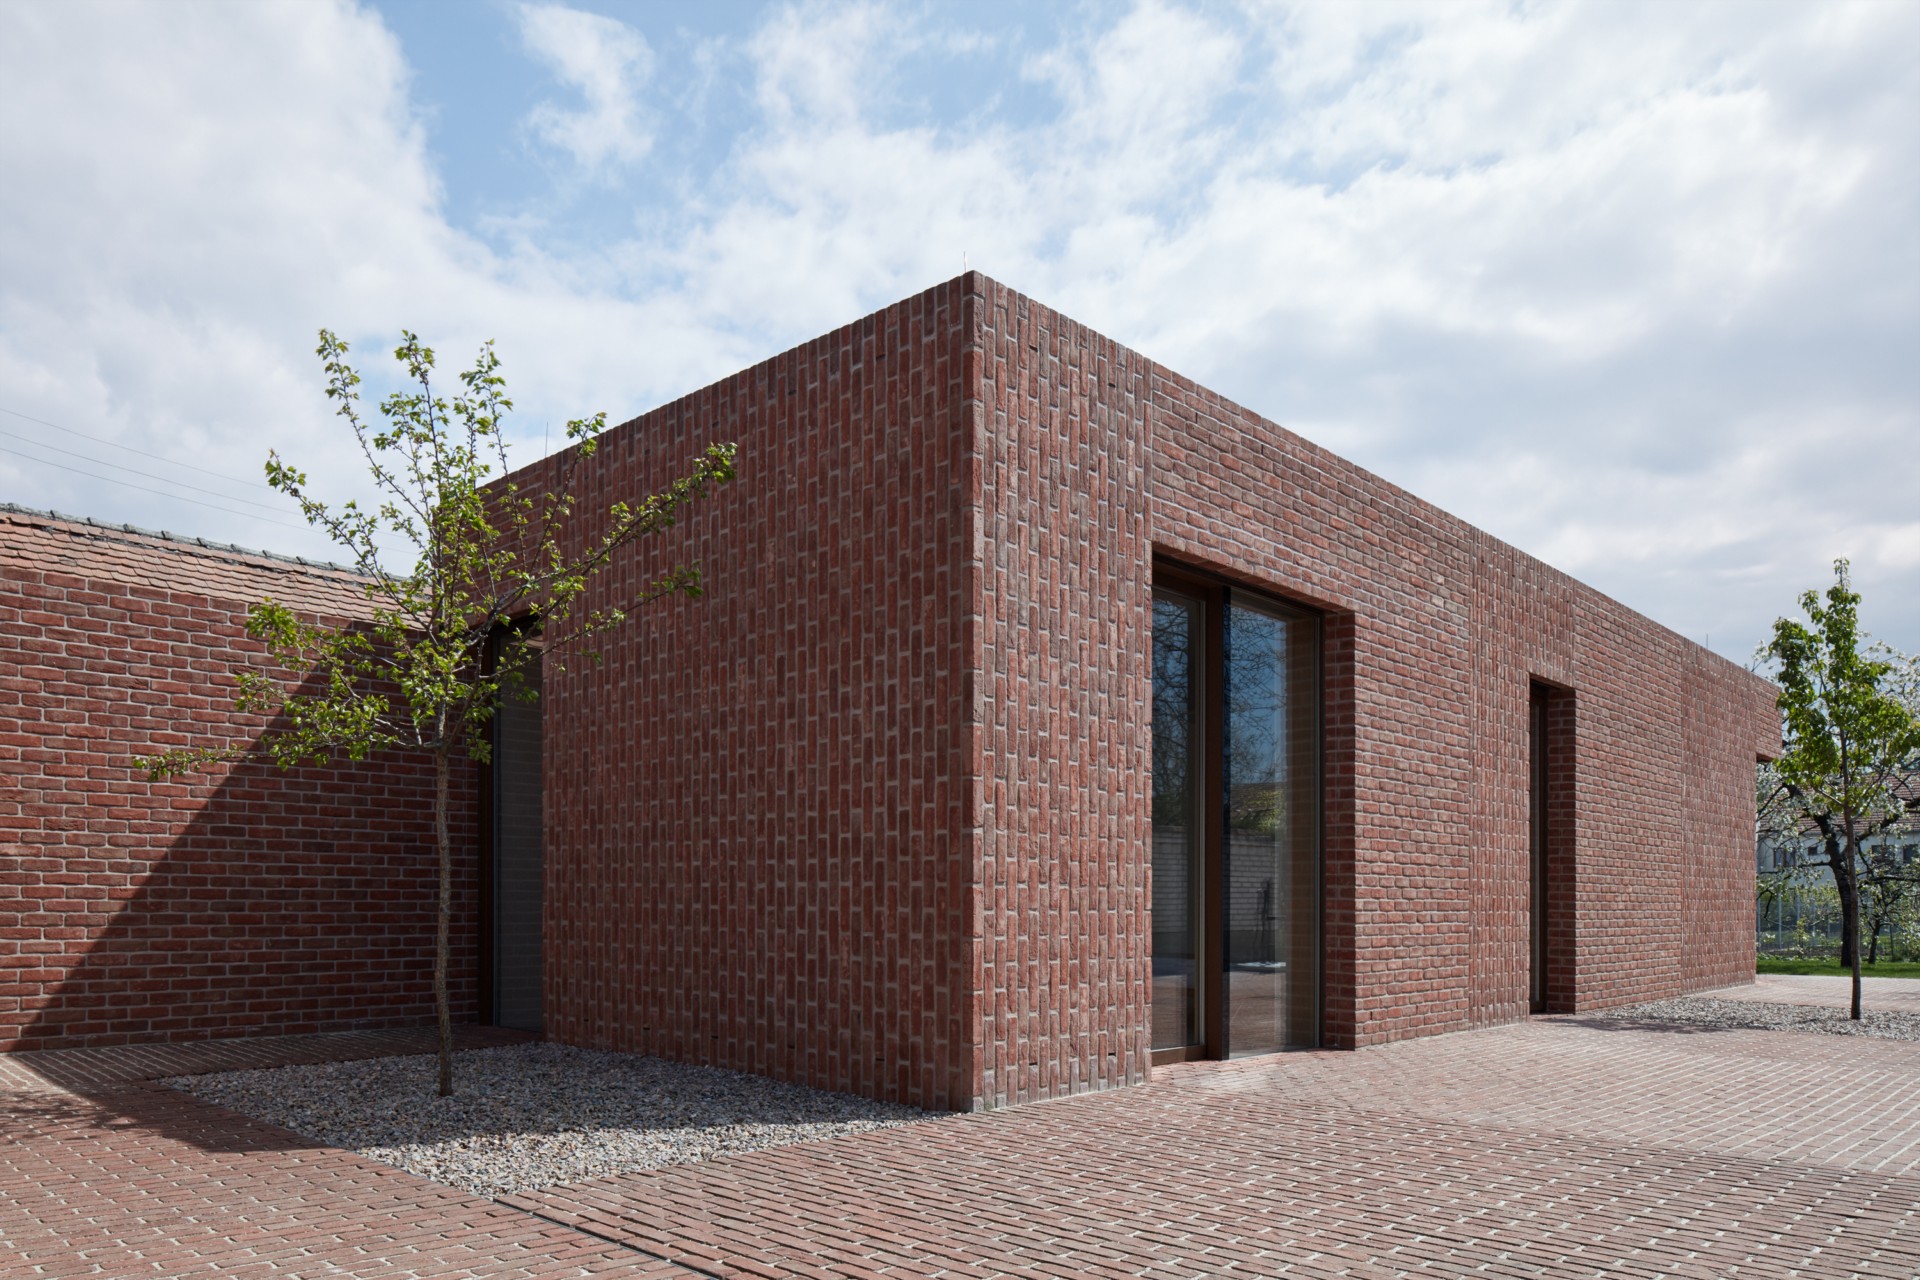 An elegy of brick: Brick Garden with Brick House by Jan Proska.